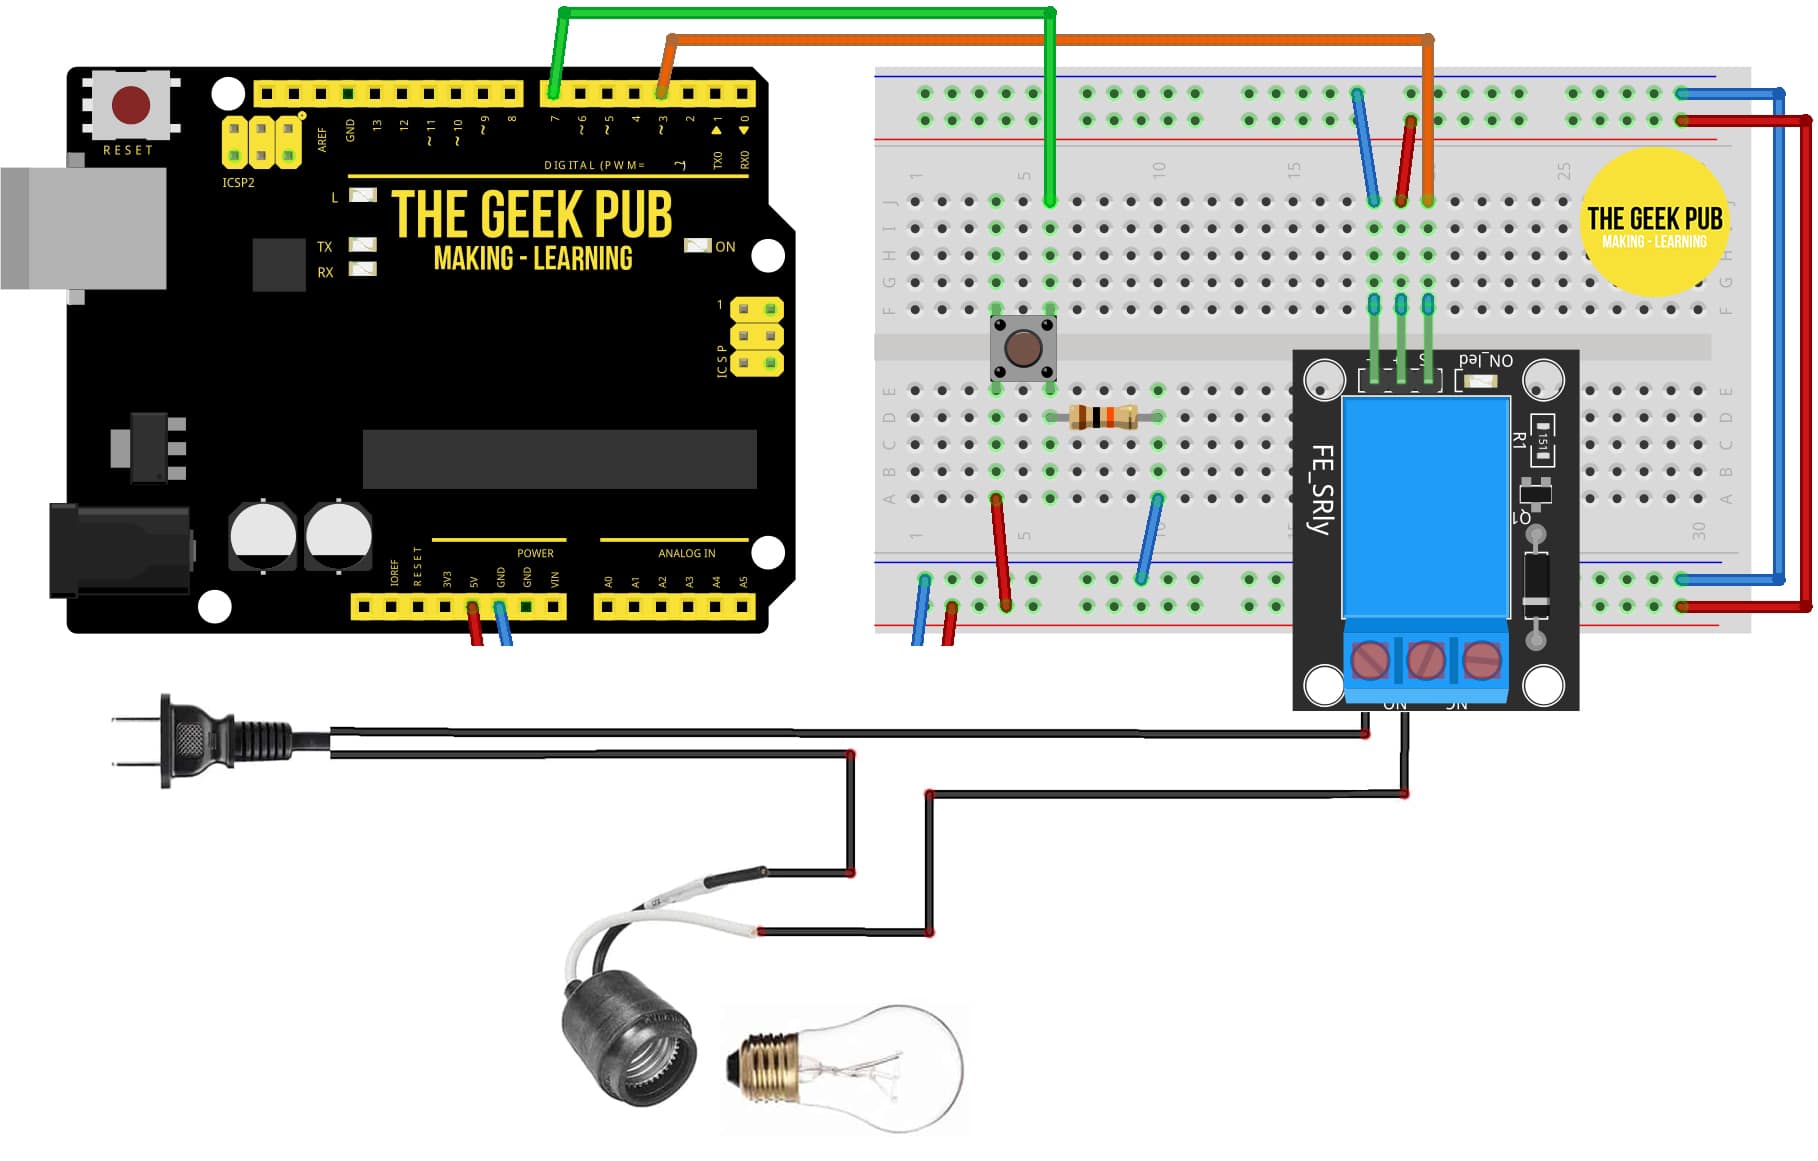 Control a relay with a button using an Arduino